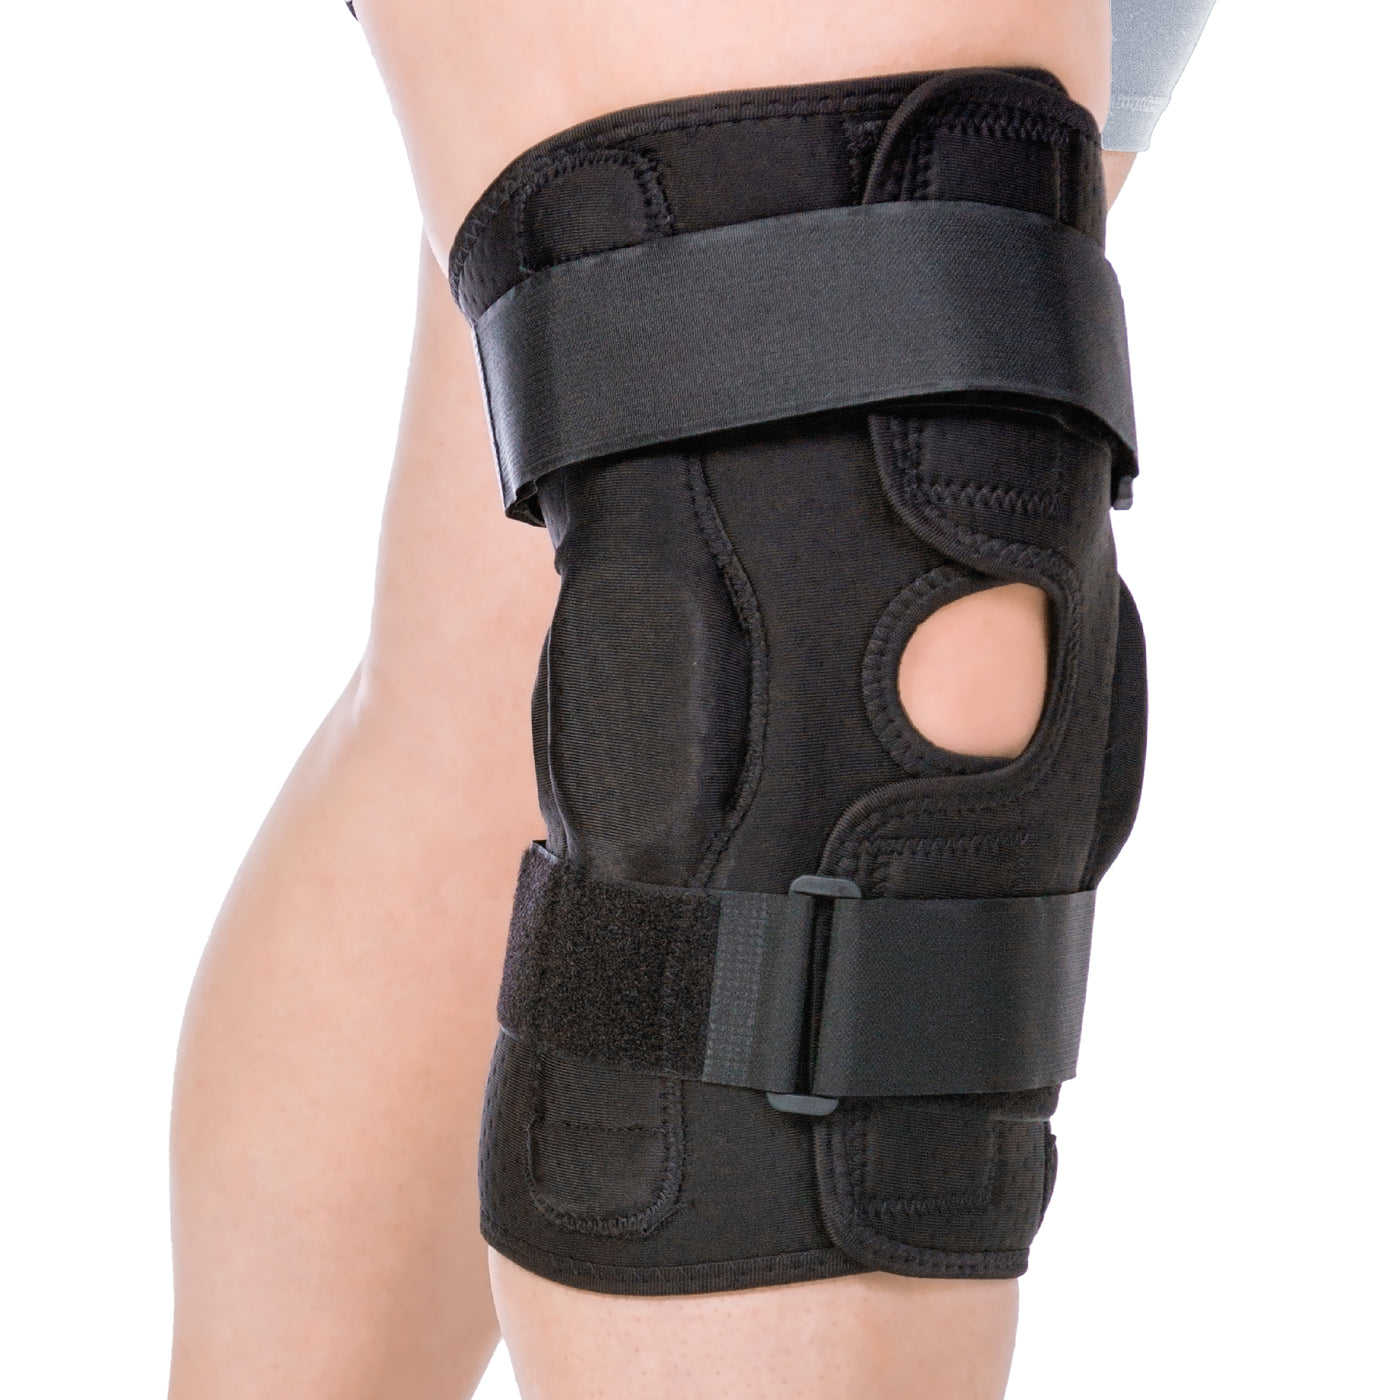 Medical Full Leg Stabilizer Brace - China Knee Support, Knee